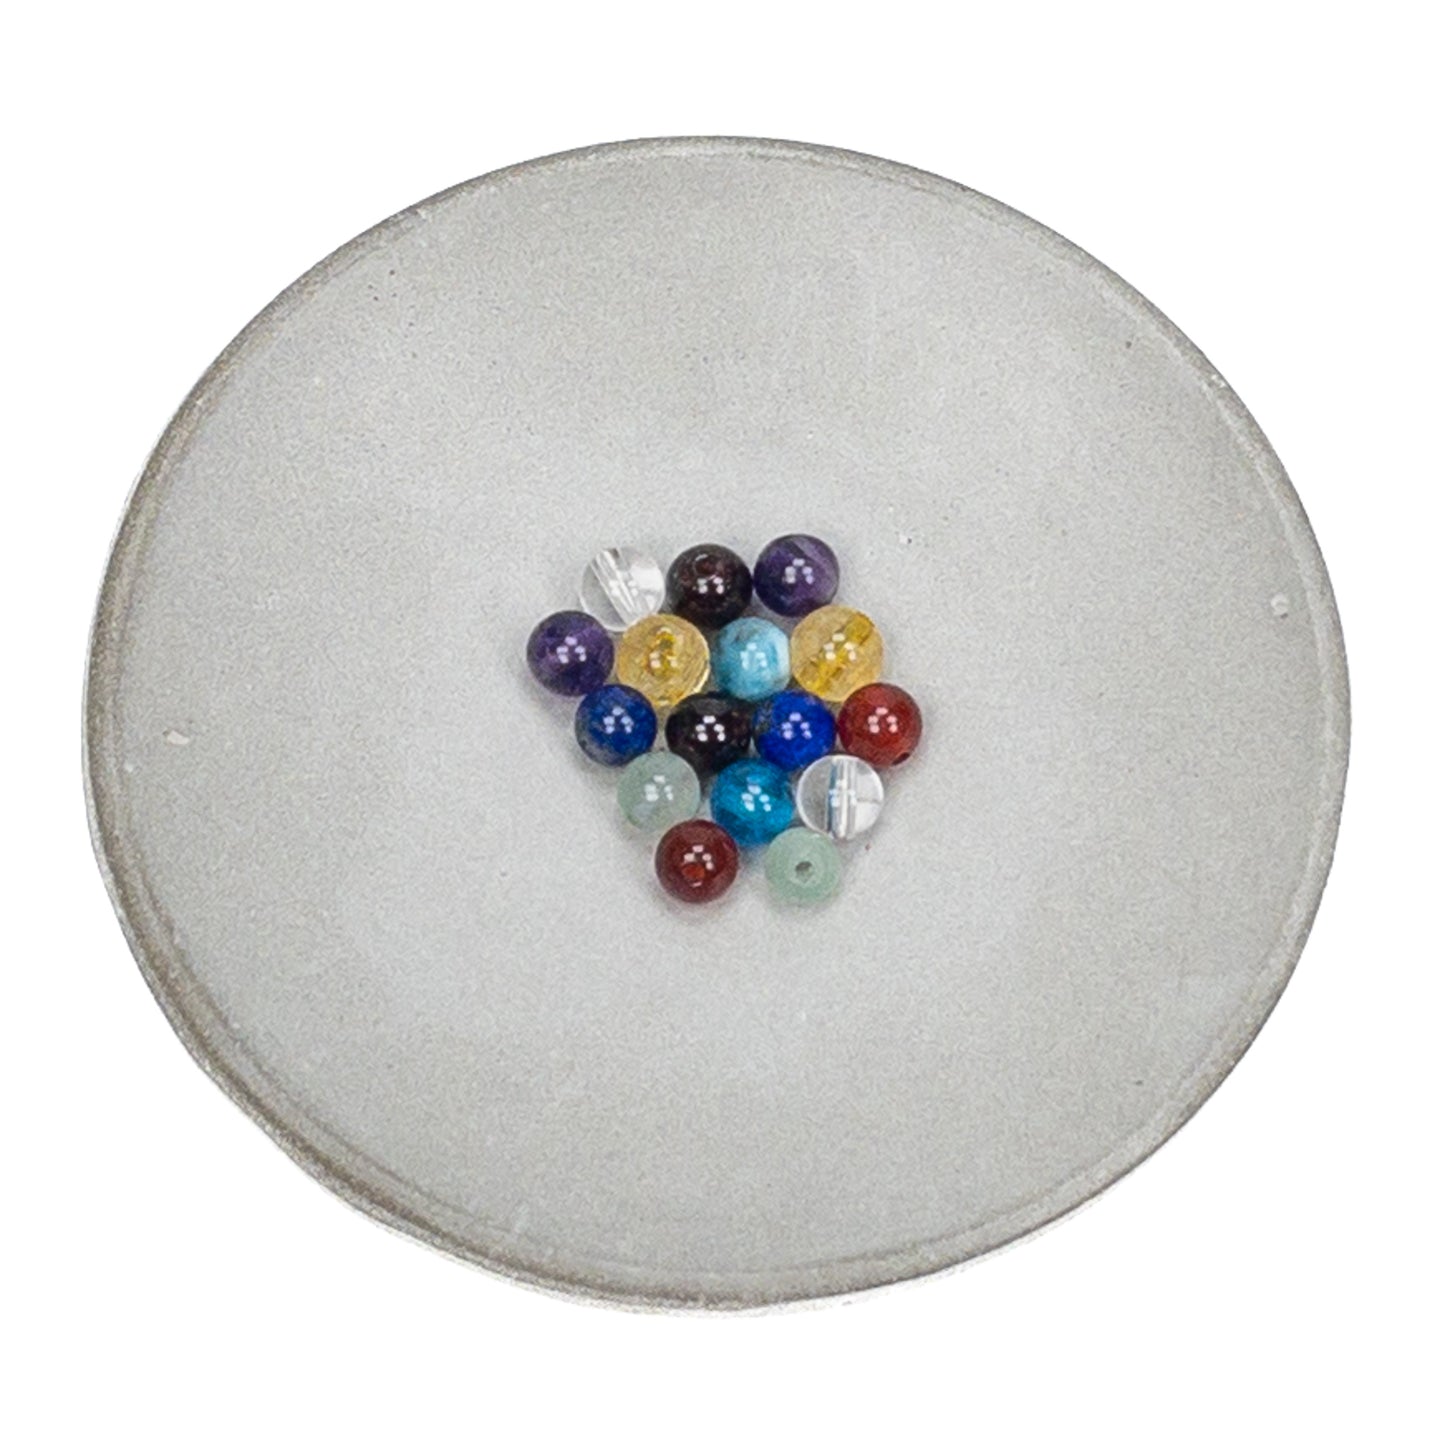 Mixed Gemstone Chakra Color 4mm Smooth Round Bead Set - 16 pcs.